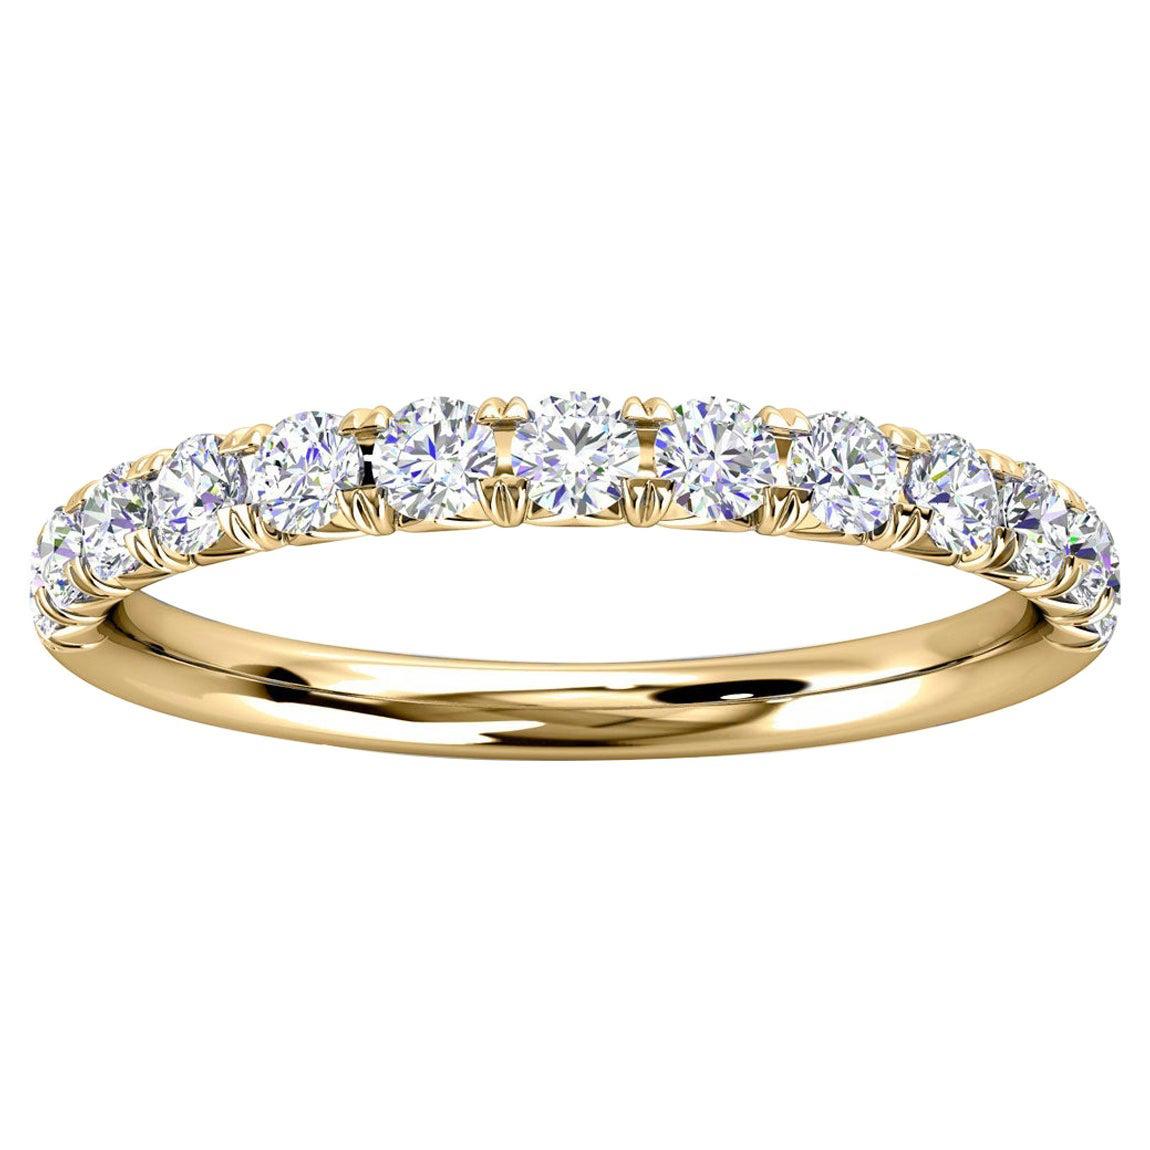 14K Yellow Gold Voyage French Pave Diamond Ring '1/3 Ct. Tw'